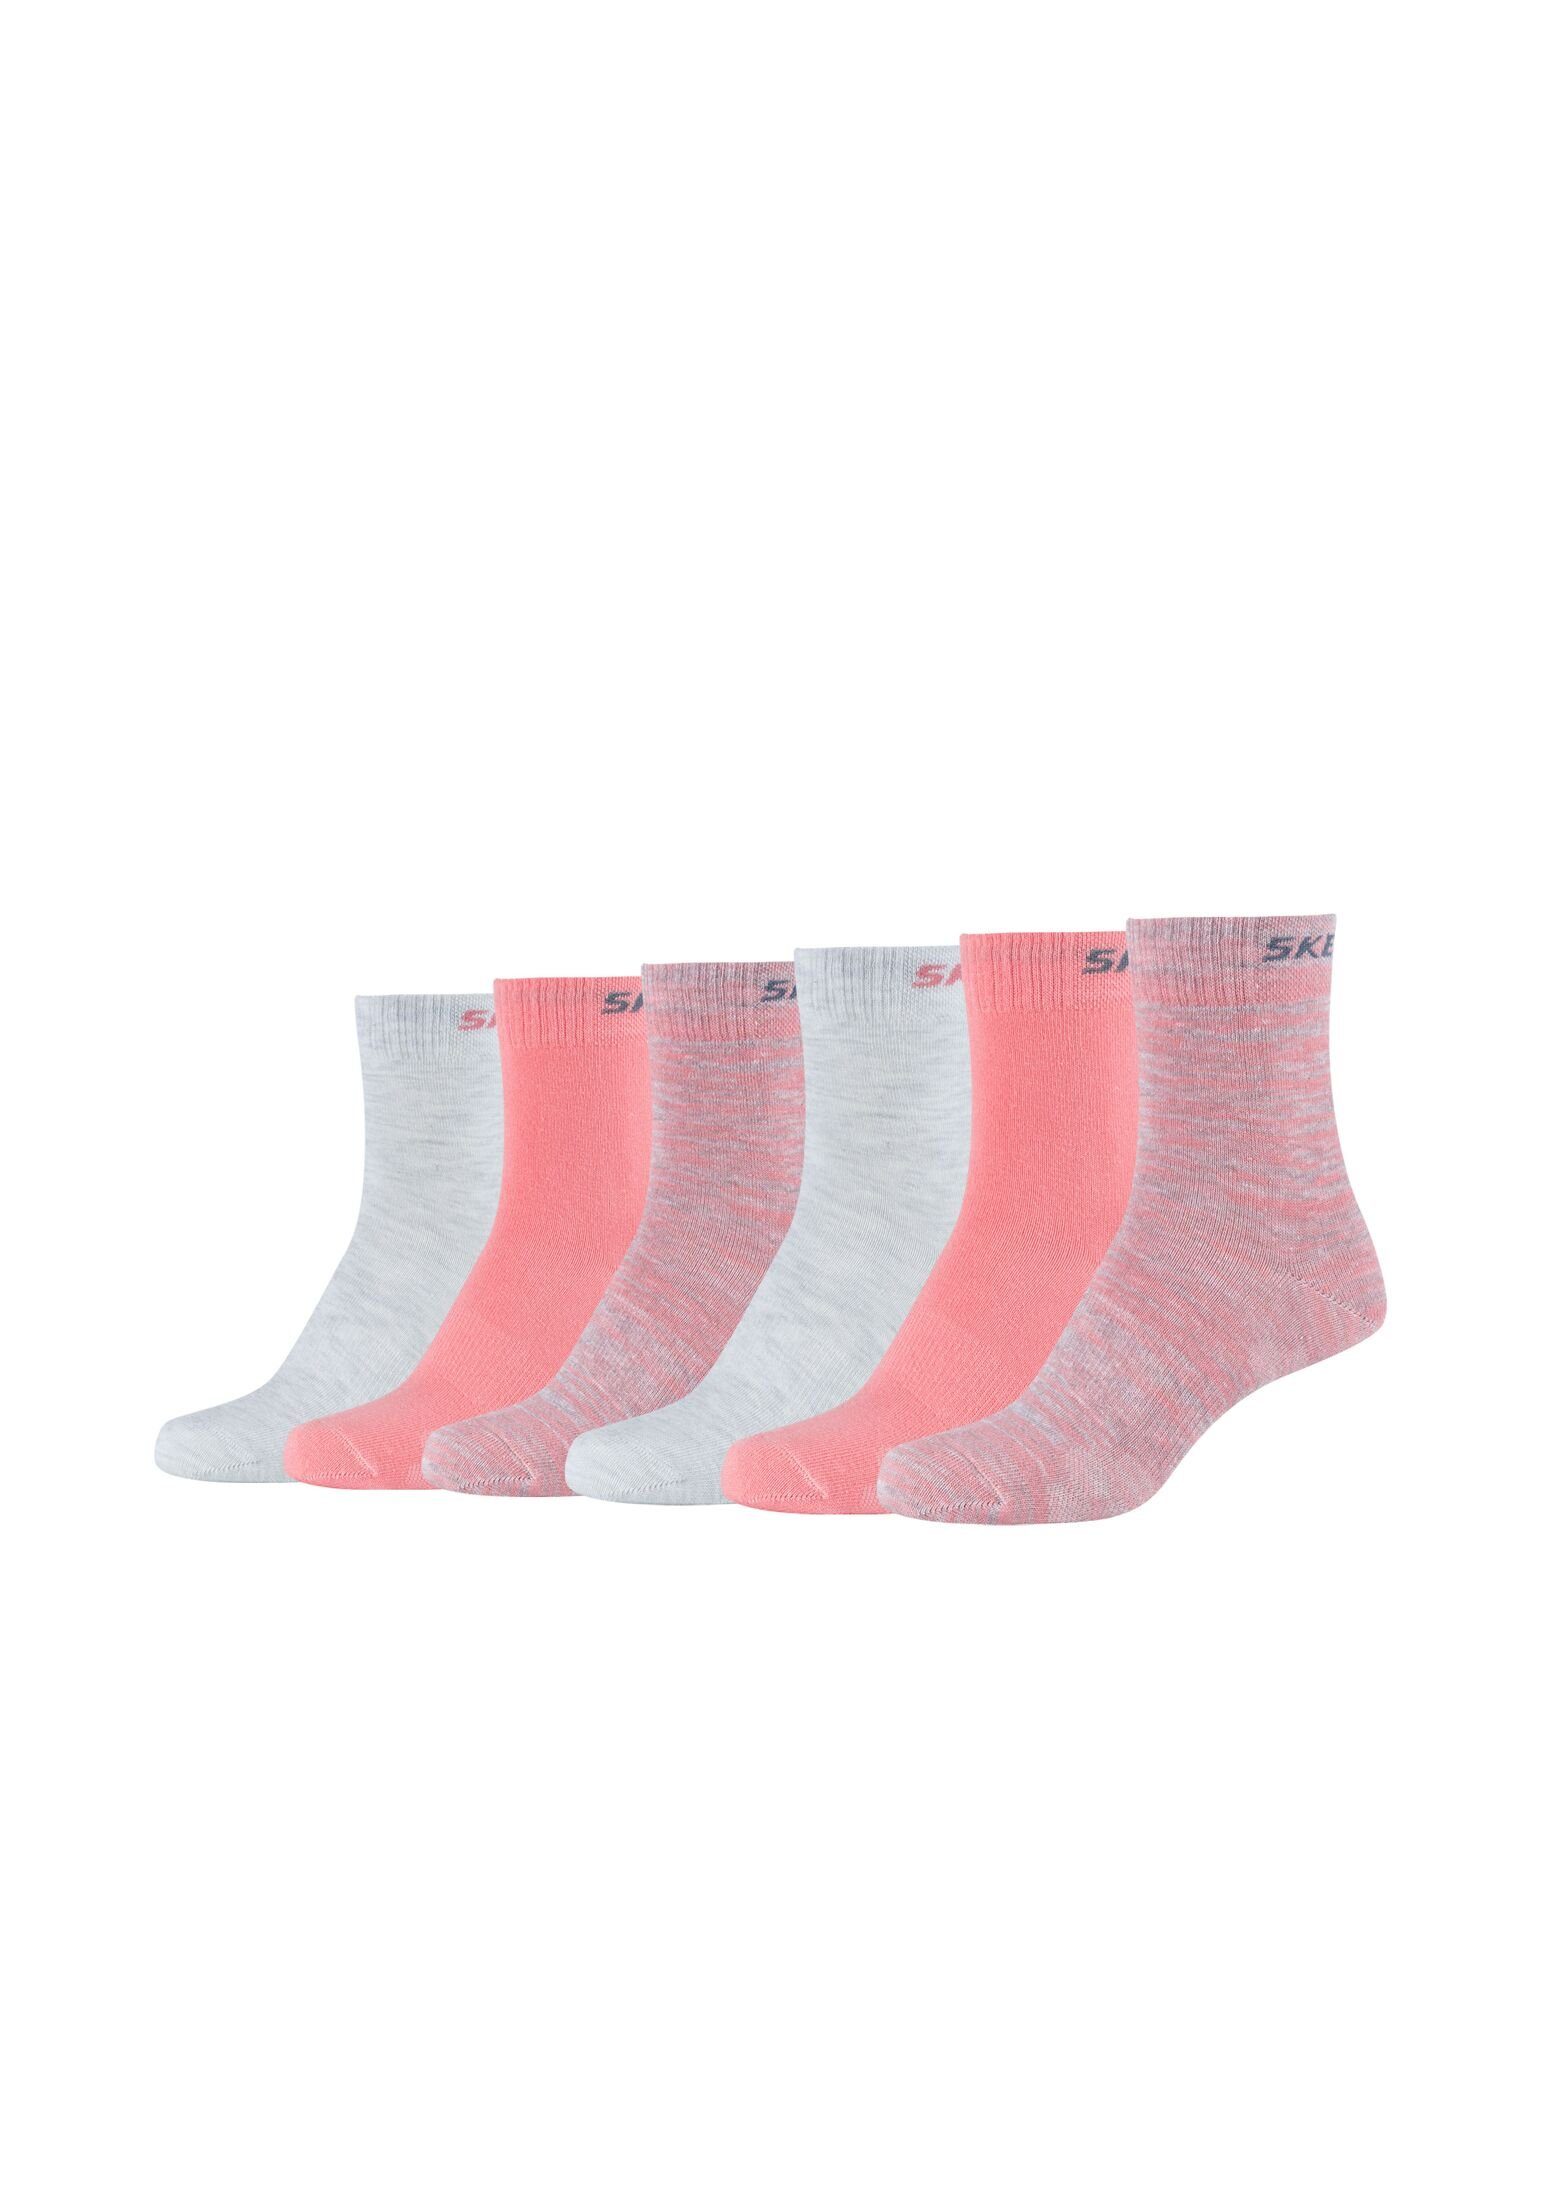 Skechers Pack Socken mouliné 6er flamingo Socken